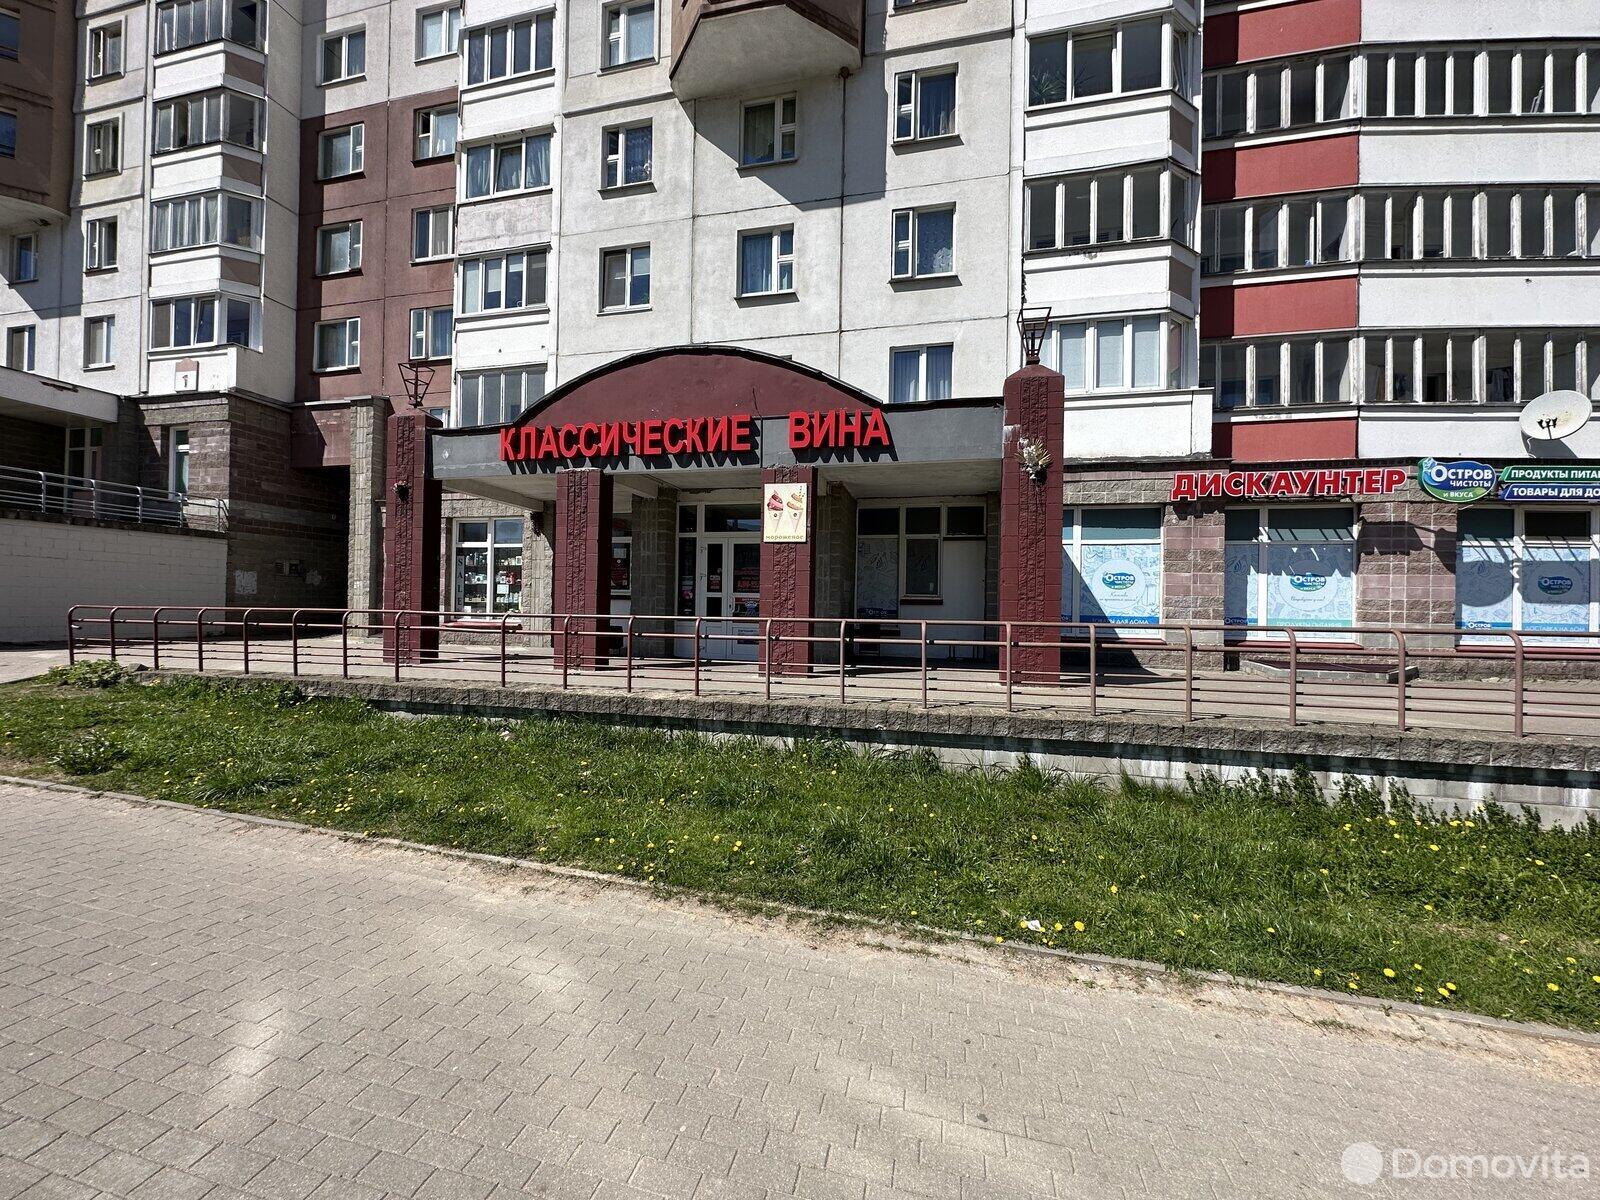 Аренда торгового помещения на ул. Скрипникова, д. 1 в Минске, 2163USD, код 964531 - фото 2